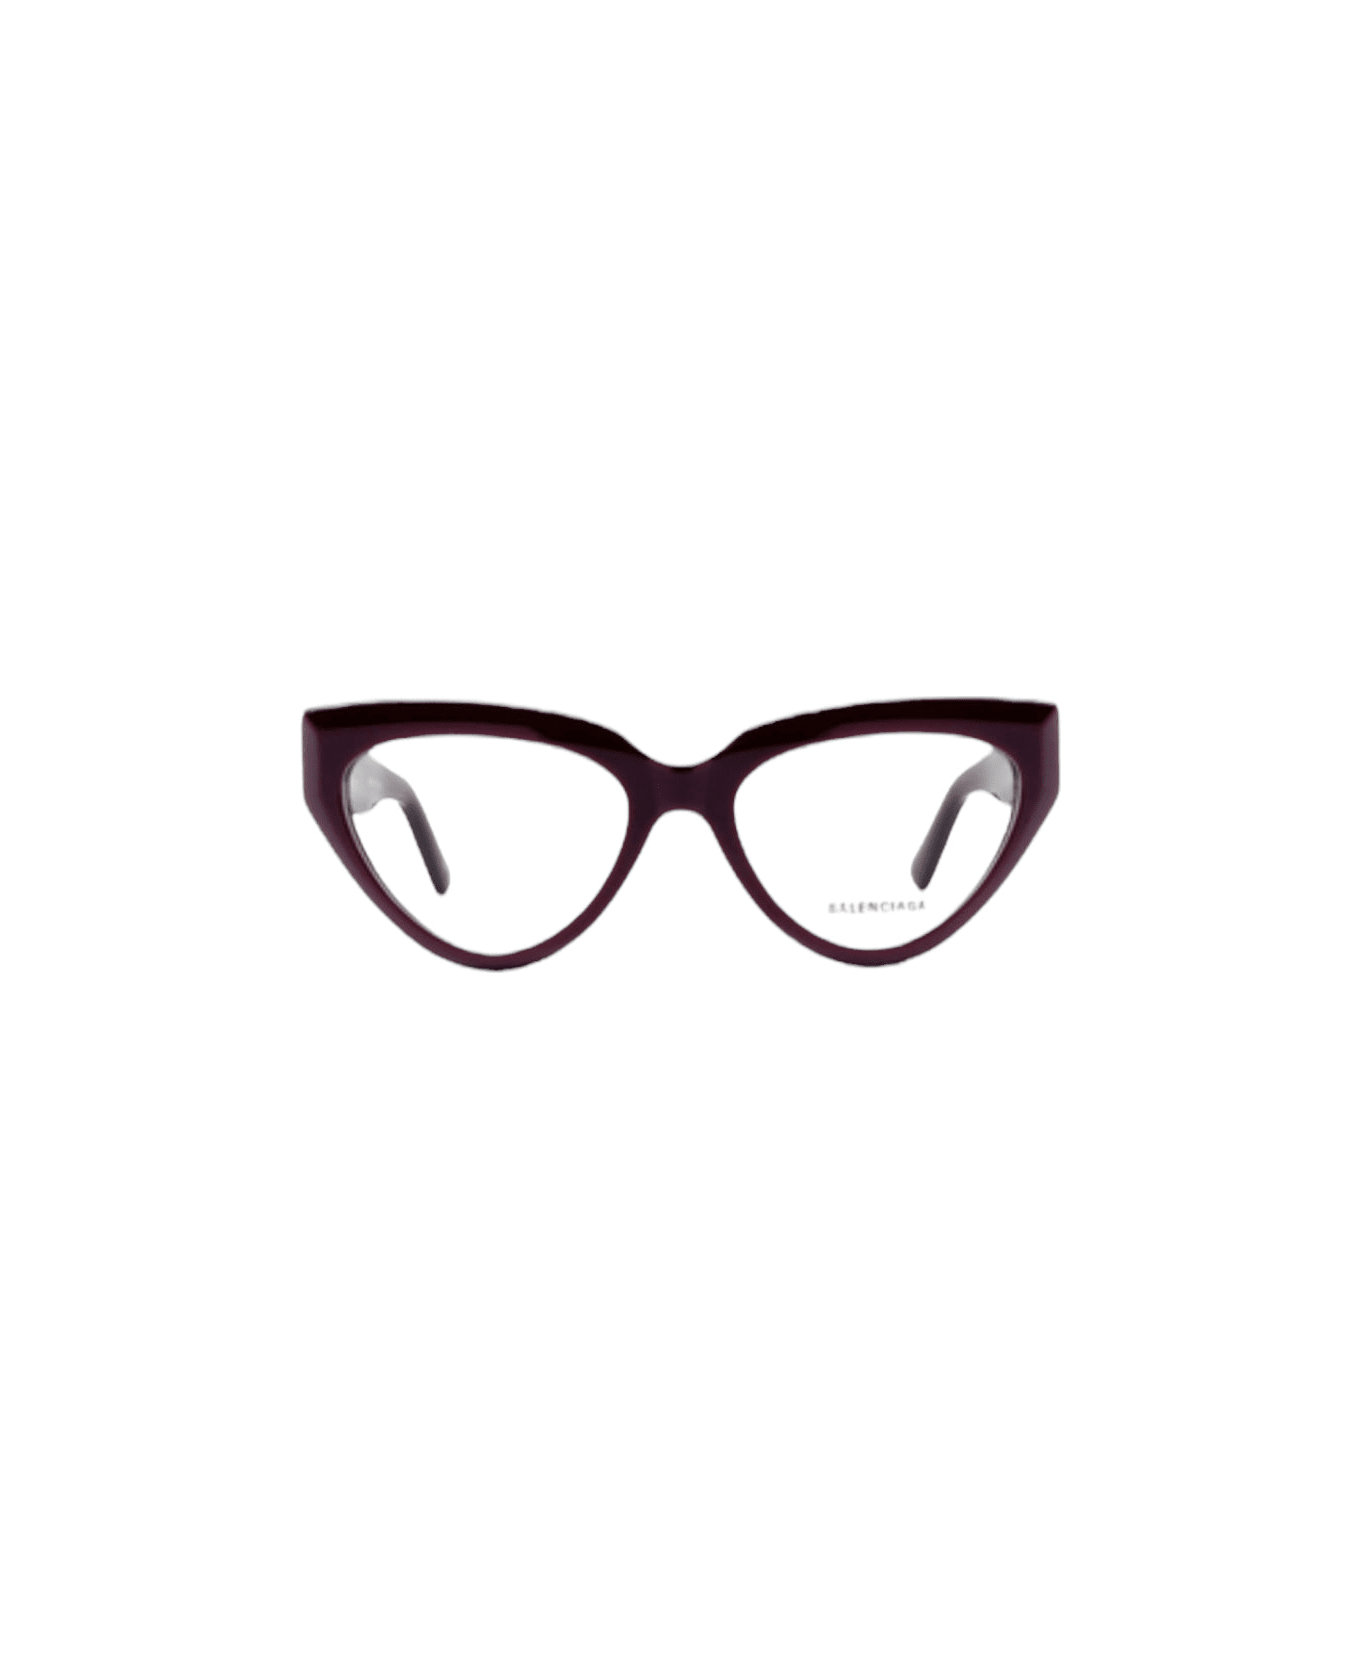 Balenciaga Eyewear Bb 0276 - Red Glasses